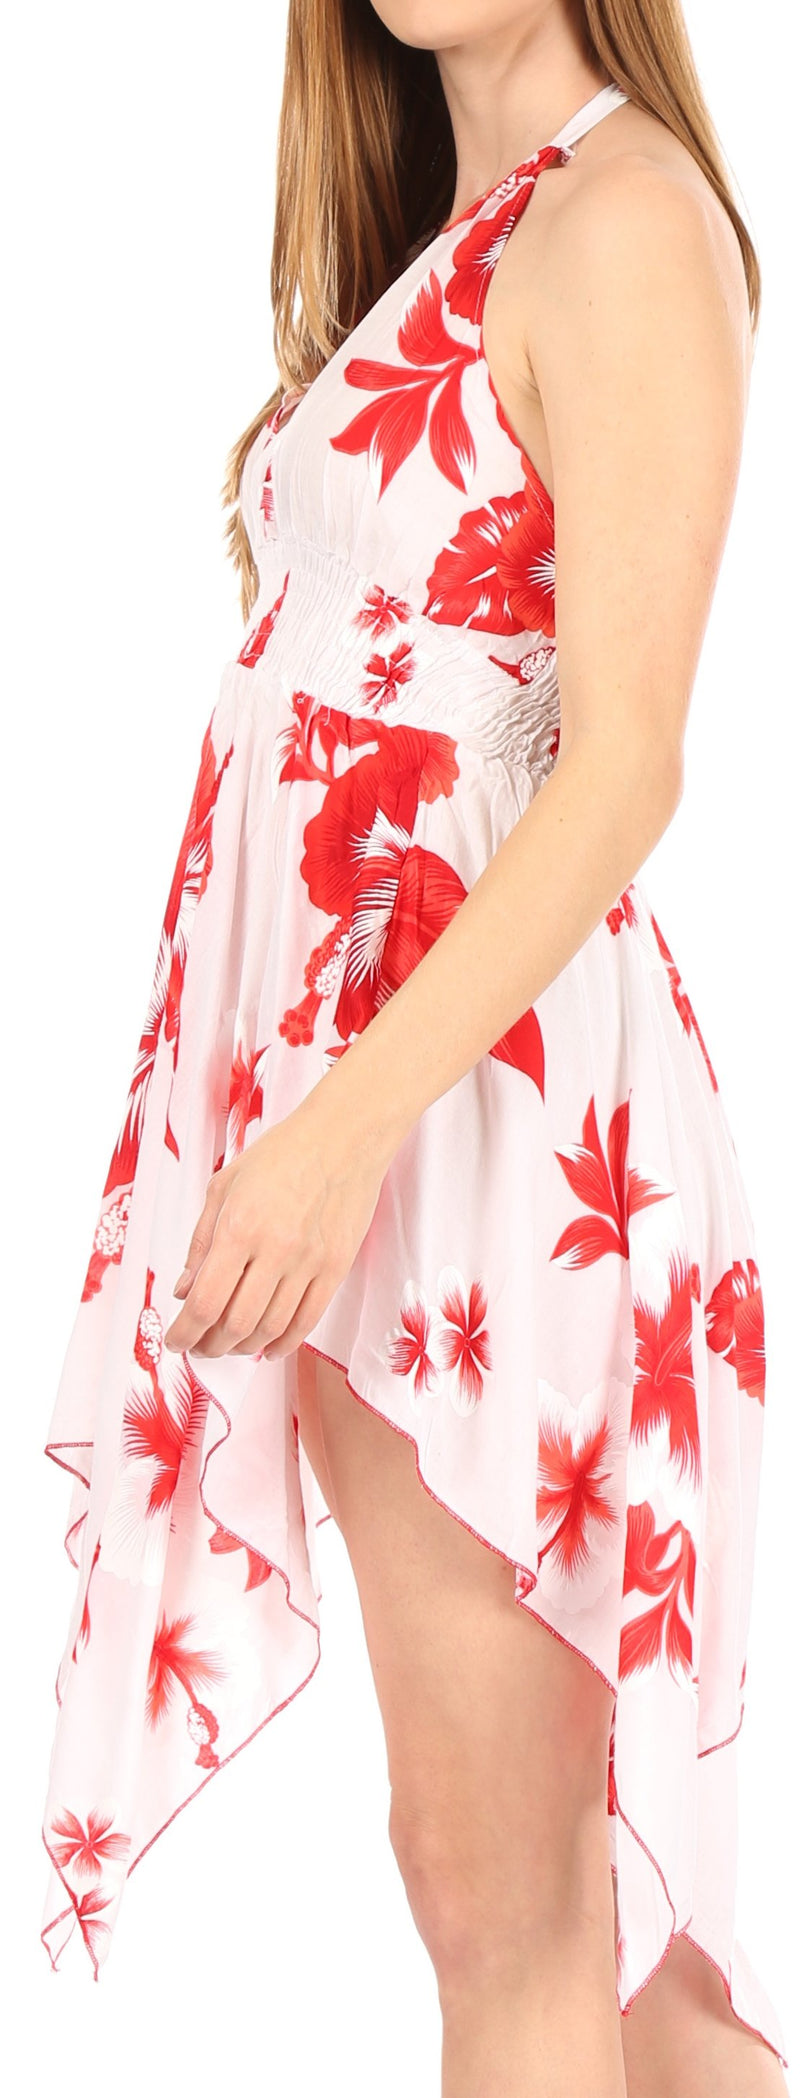 Sakkas Svana Women's V-neck Spaghetti Strap Floral Print Summer Casual Short Dress